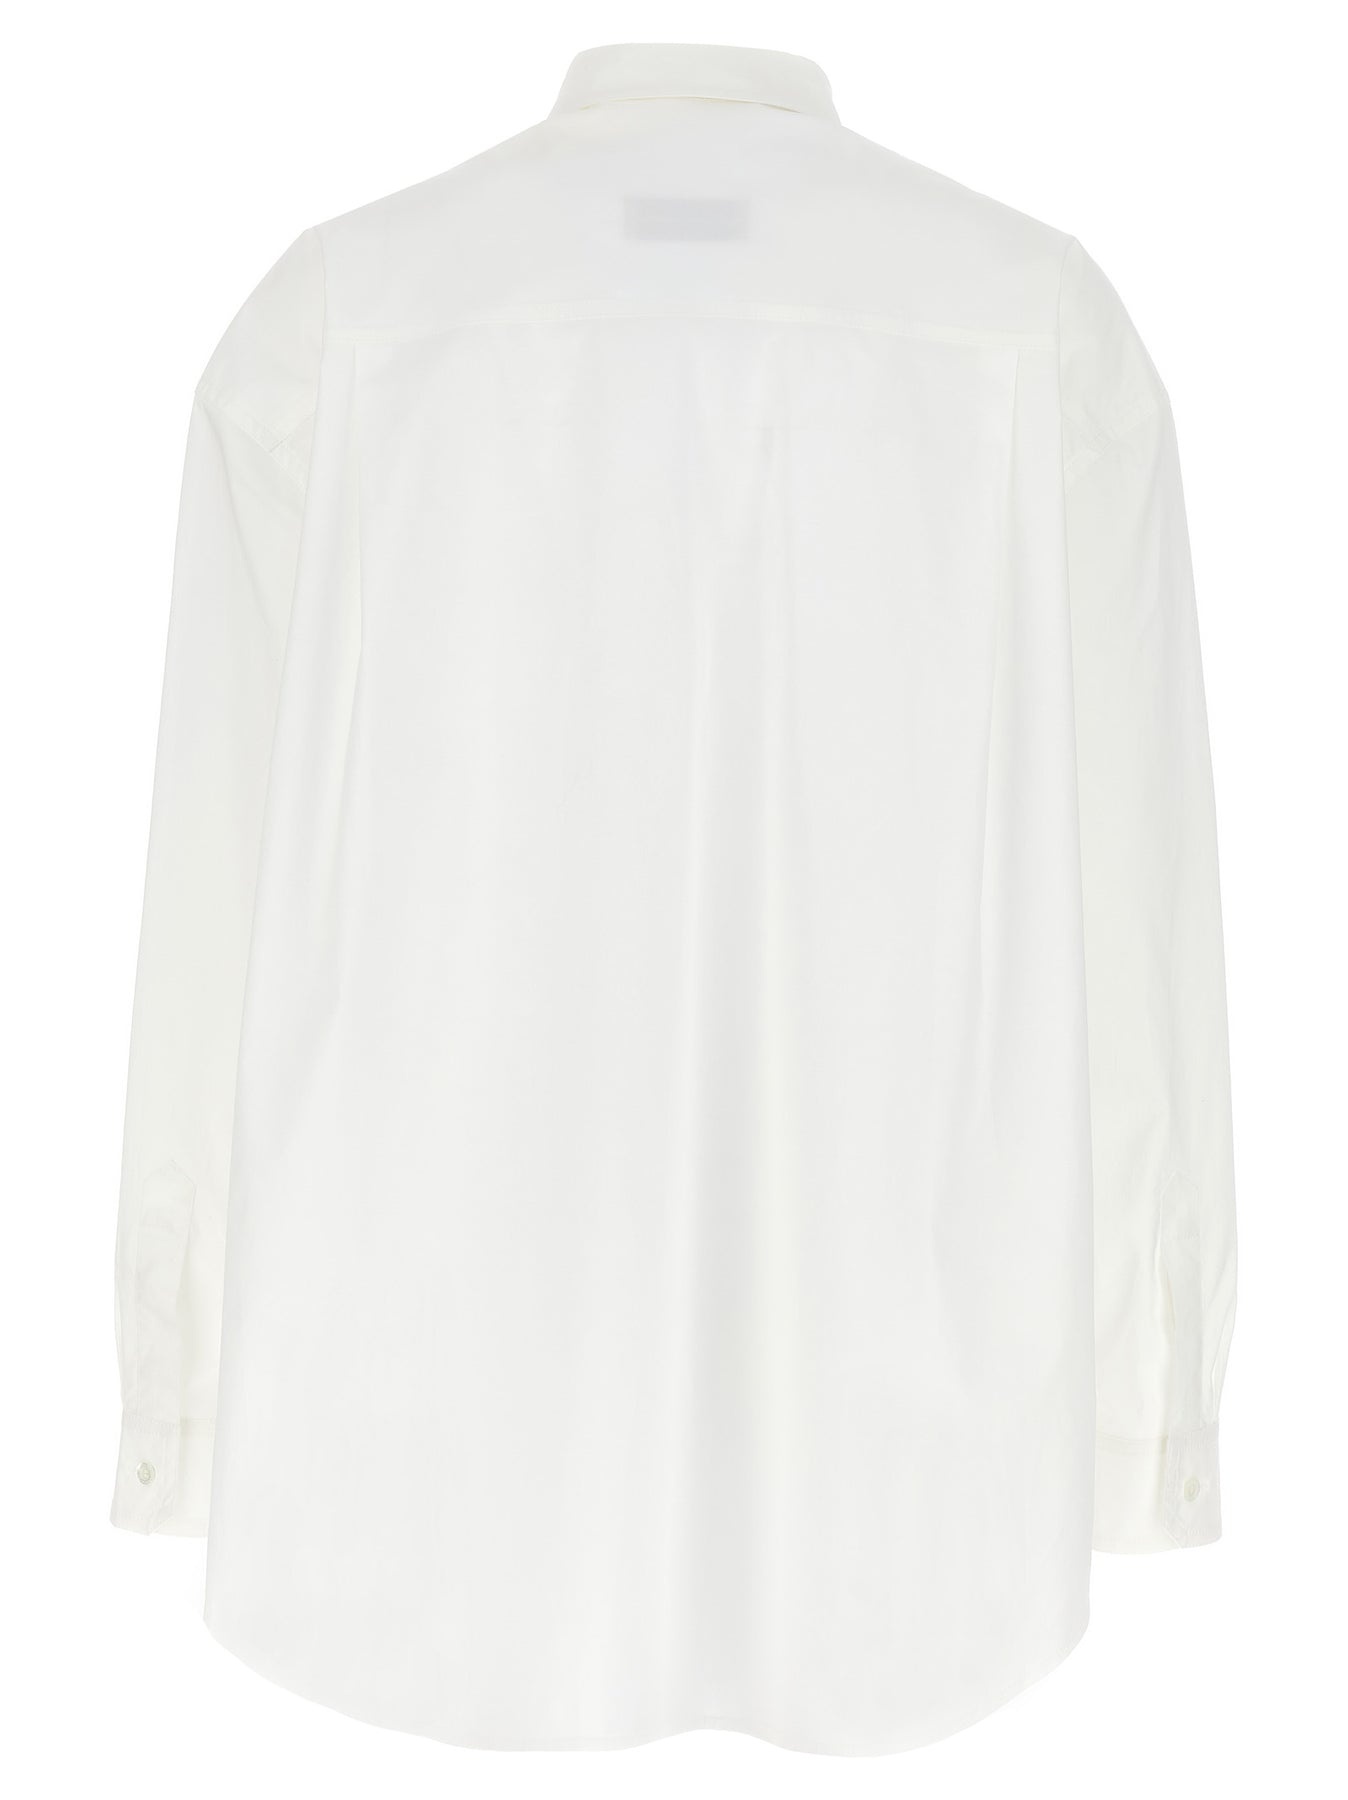 Pocket Shirt Shirt, Blouse White - 2